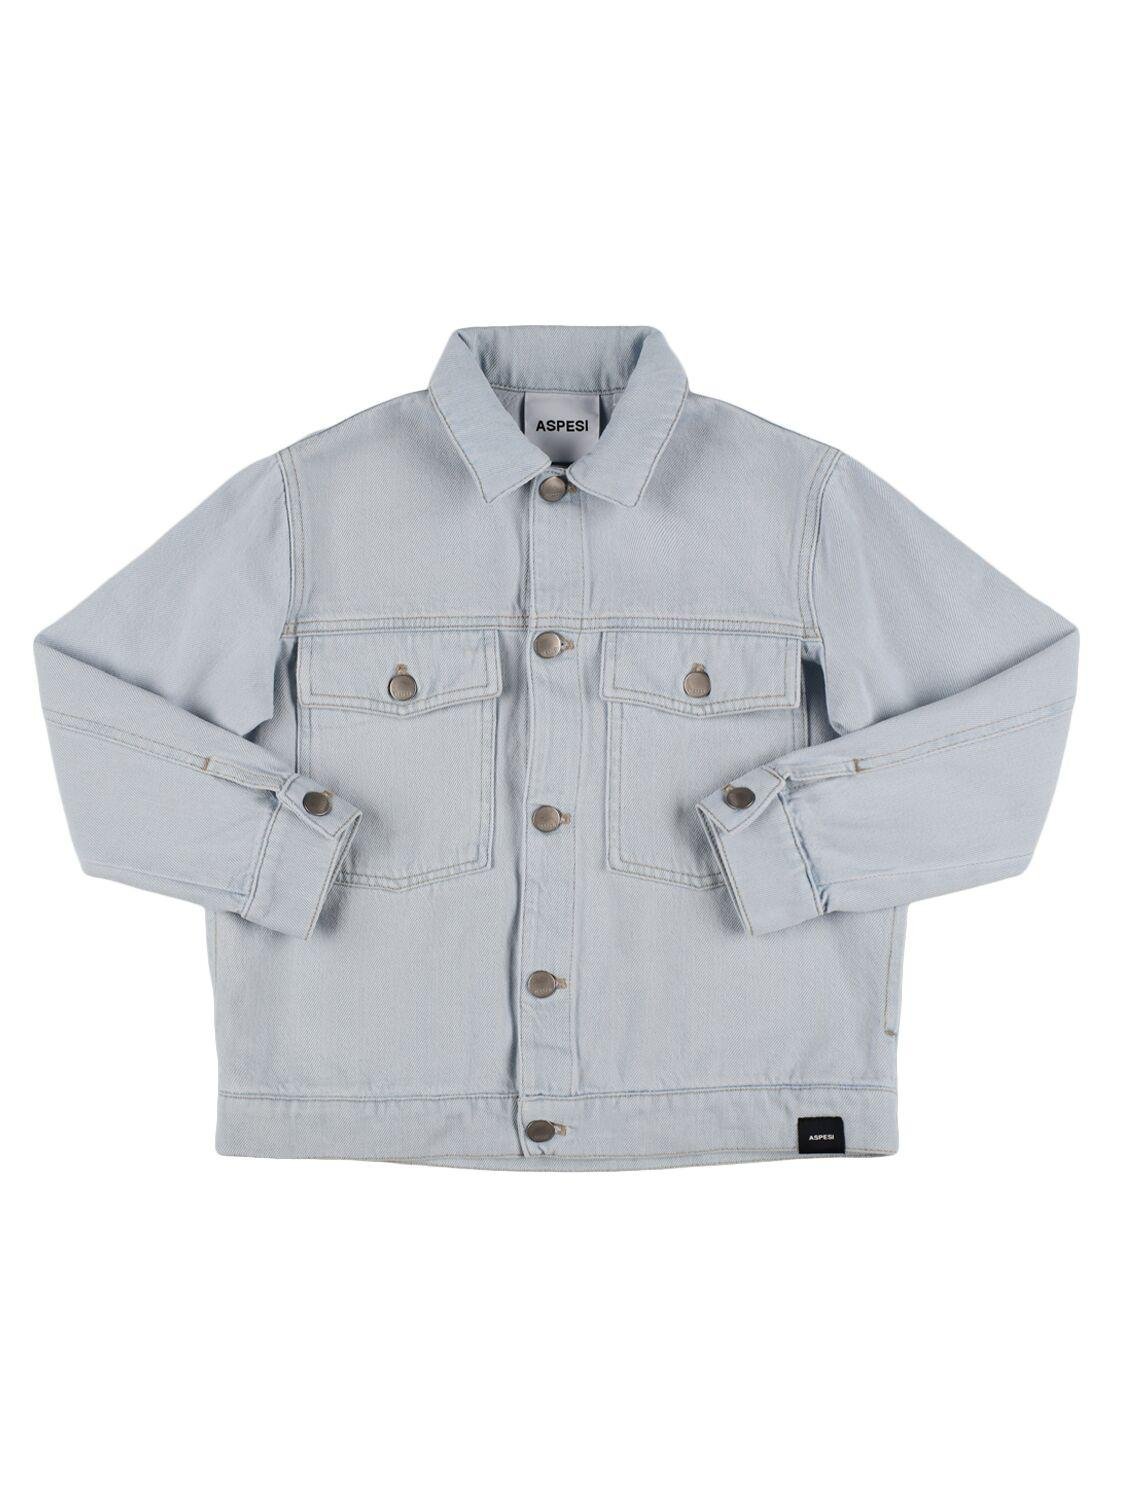 Cotton Denim Jacket by ASPESI